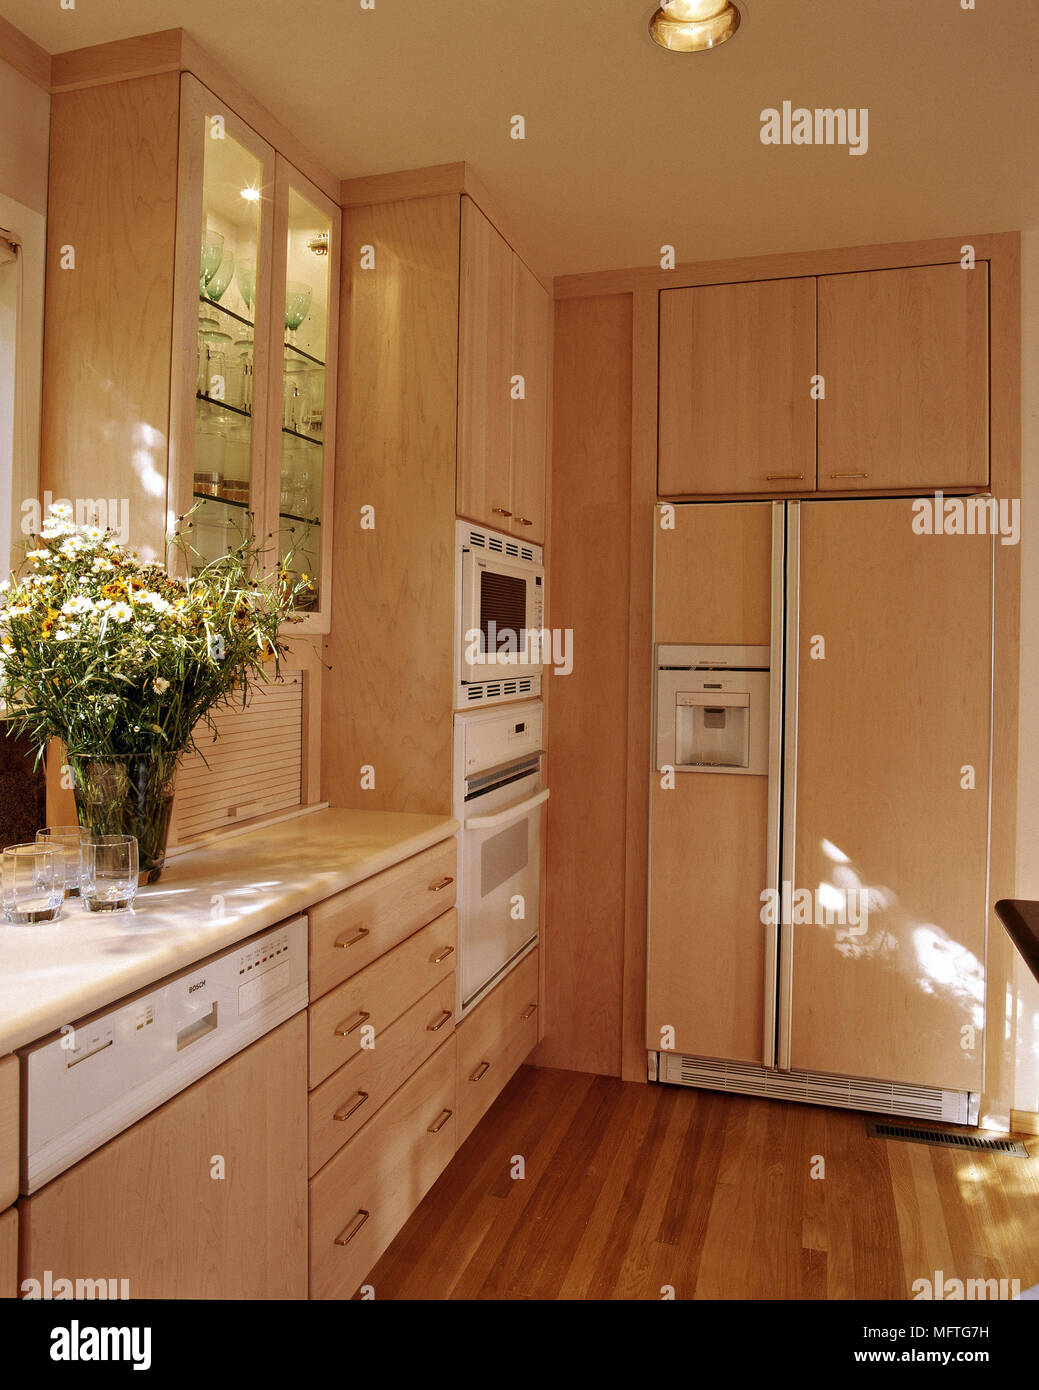 Modern kitchen cream units stainless steel fridge interiors kitchens  appliances Stock Photo - Alamy